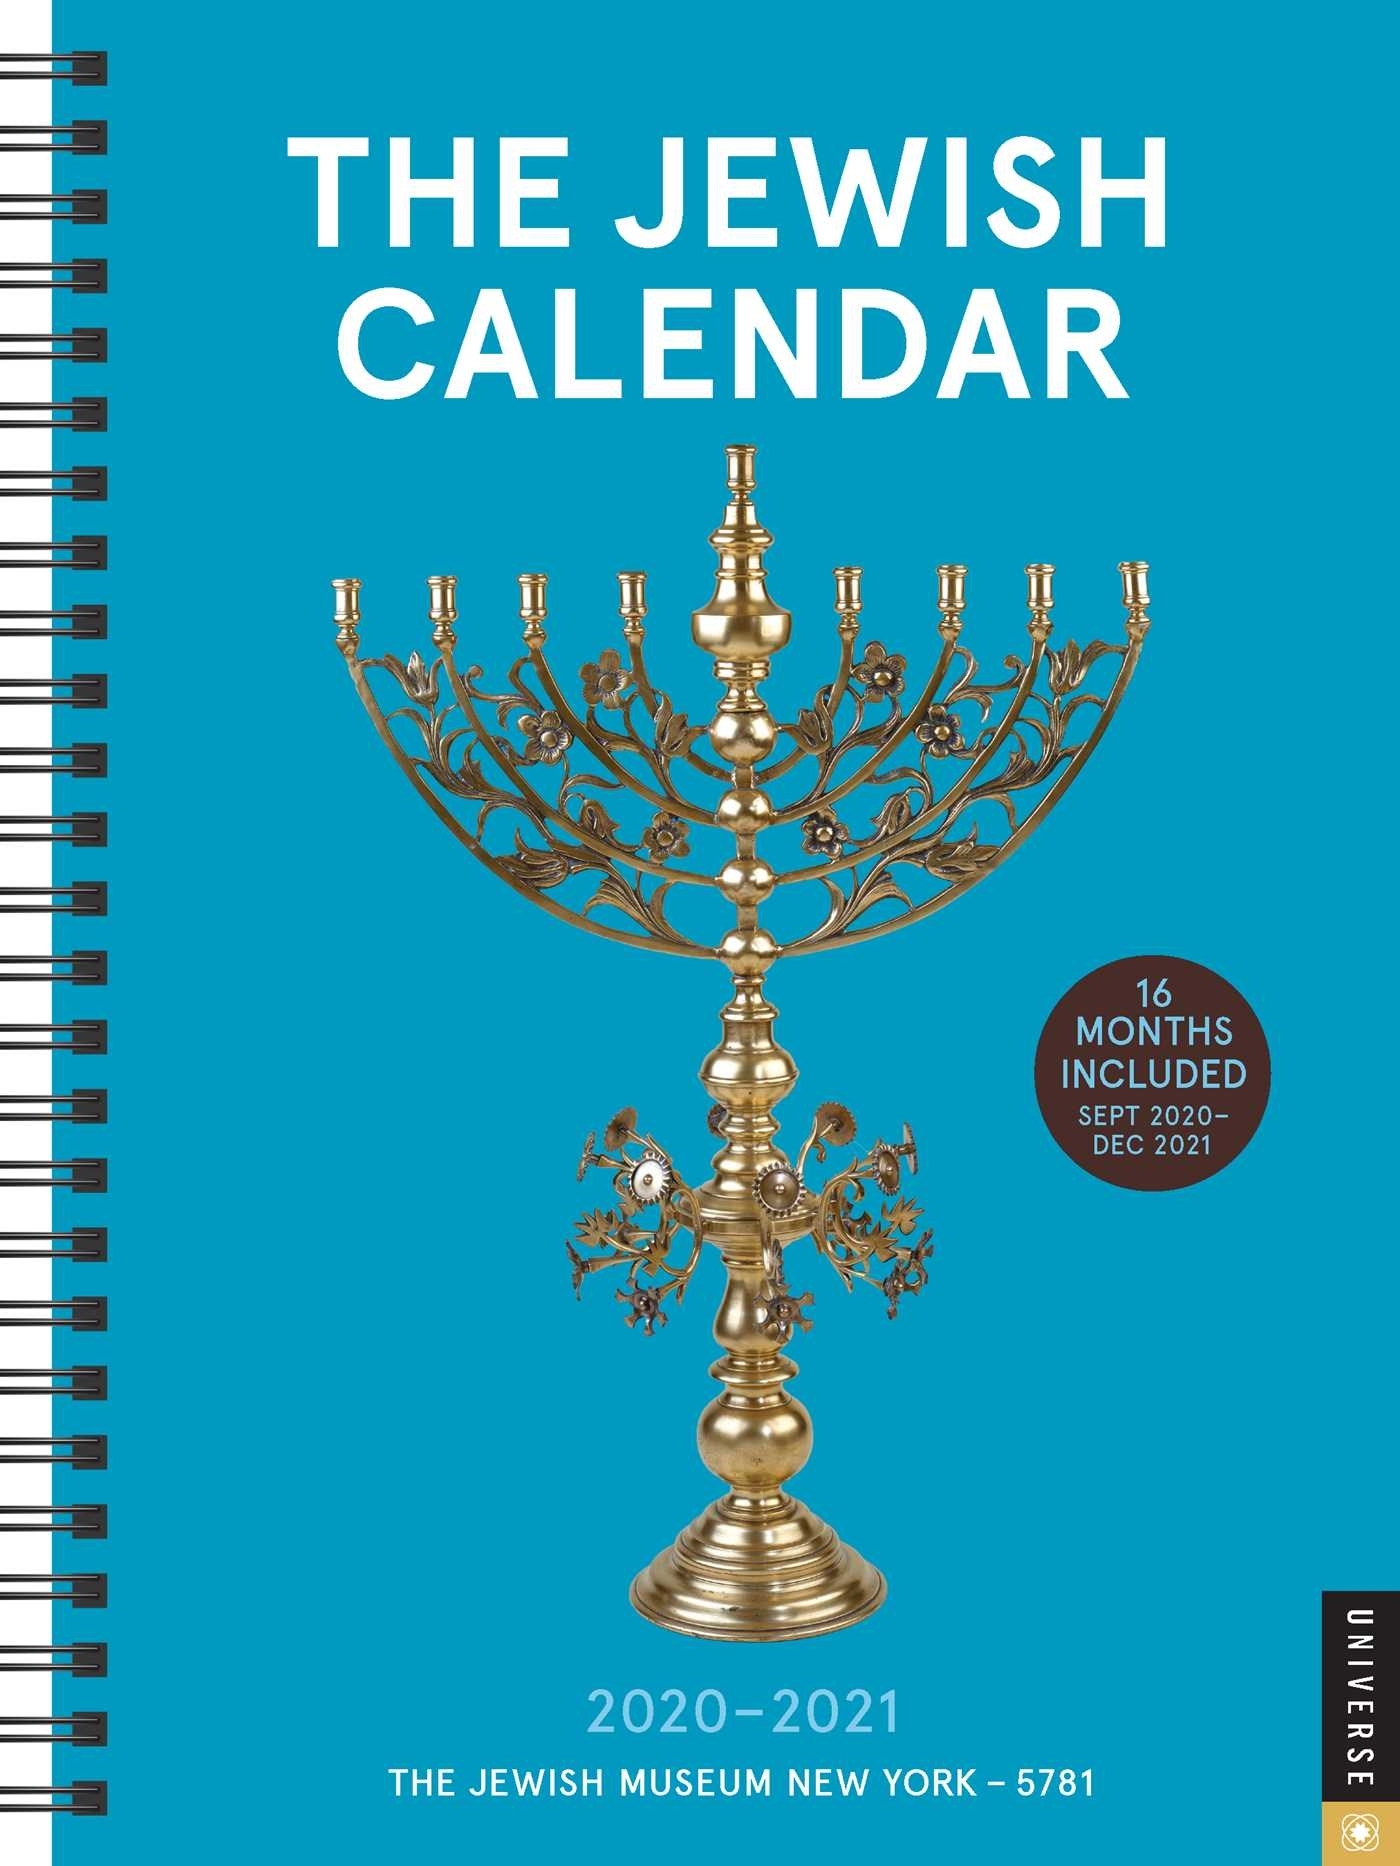 Catch Jewish Feast September To December 2021